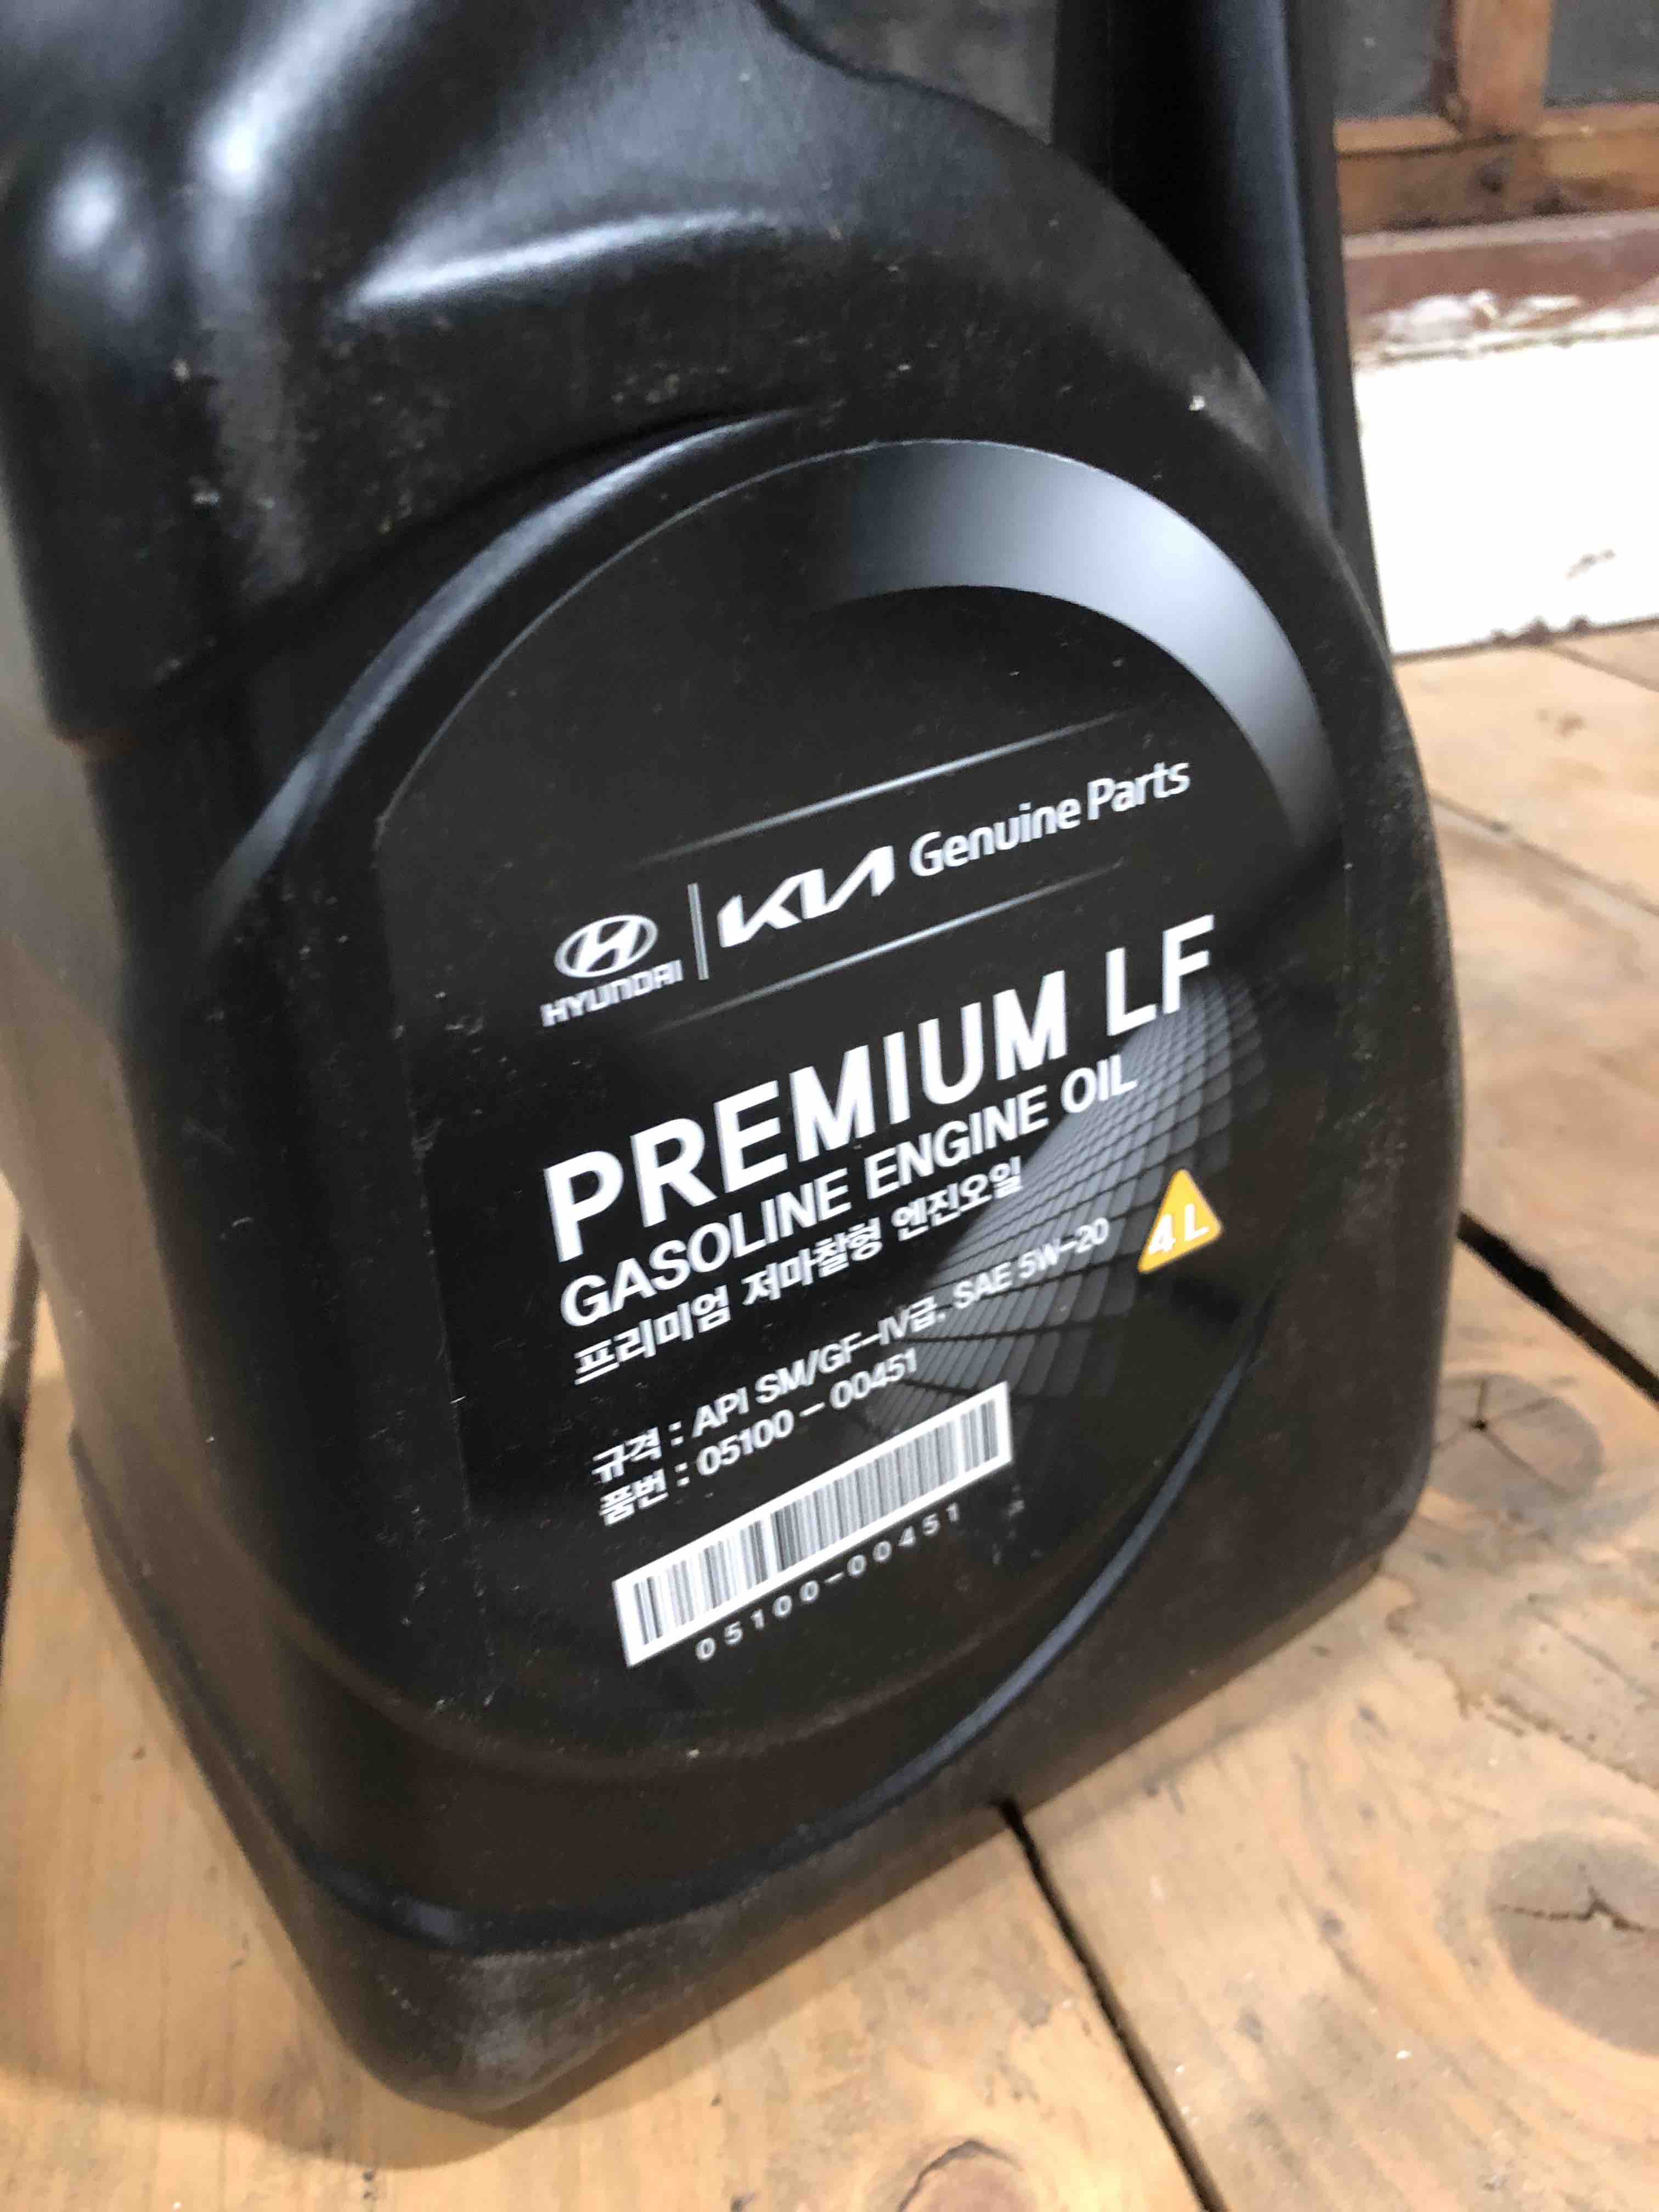 Hyundai Premium LF gasoline 5w30.